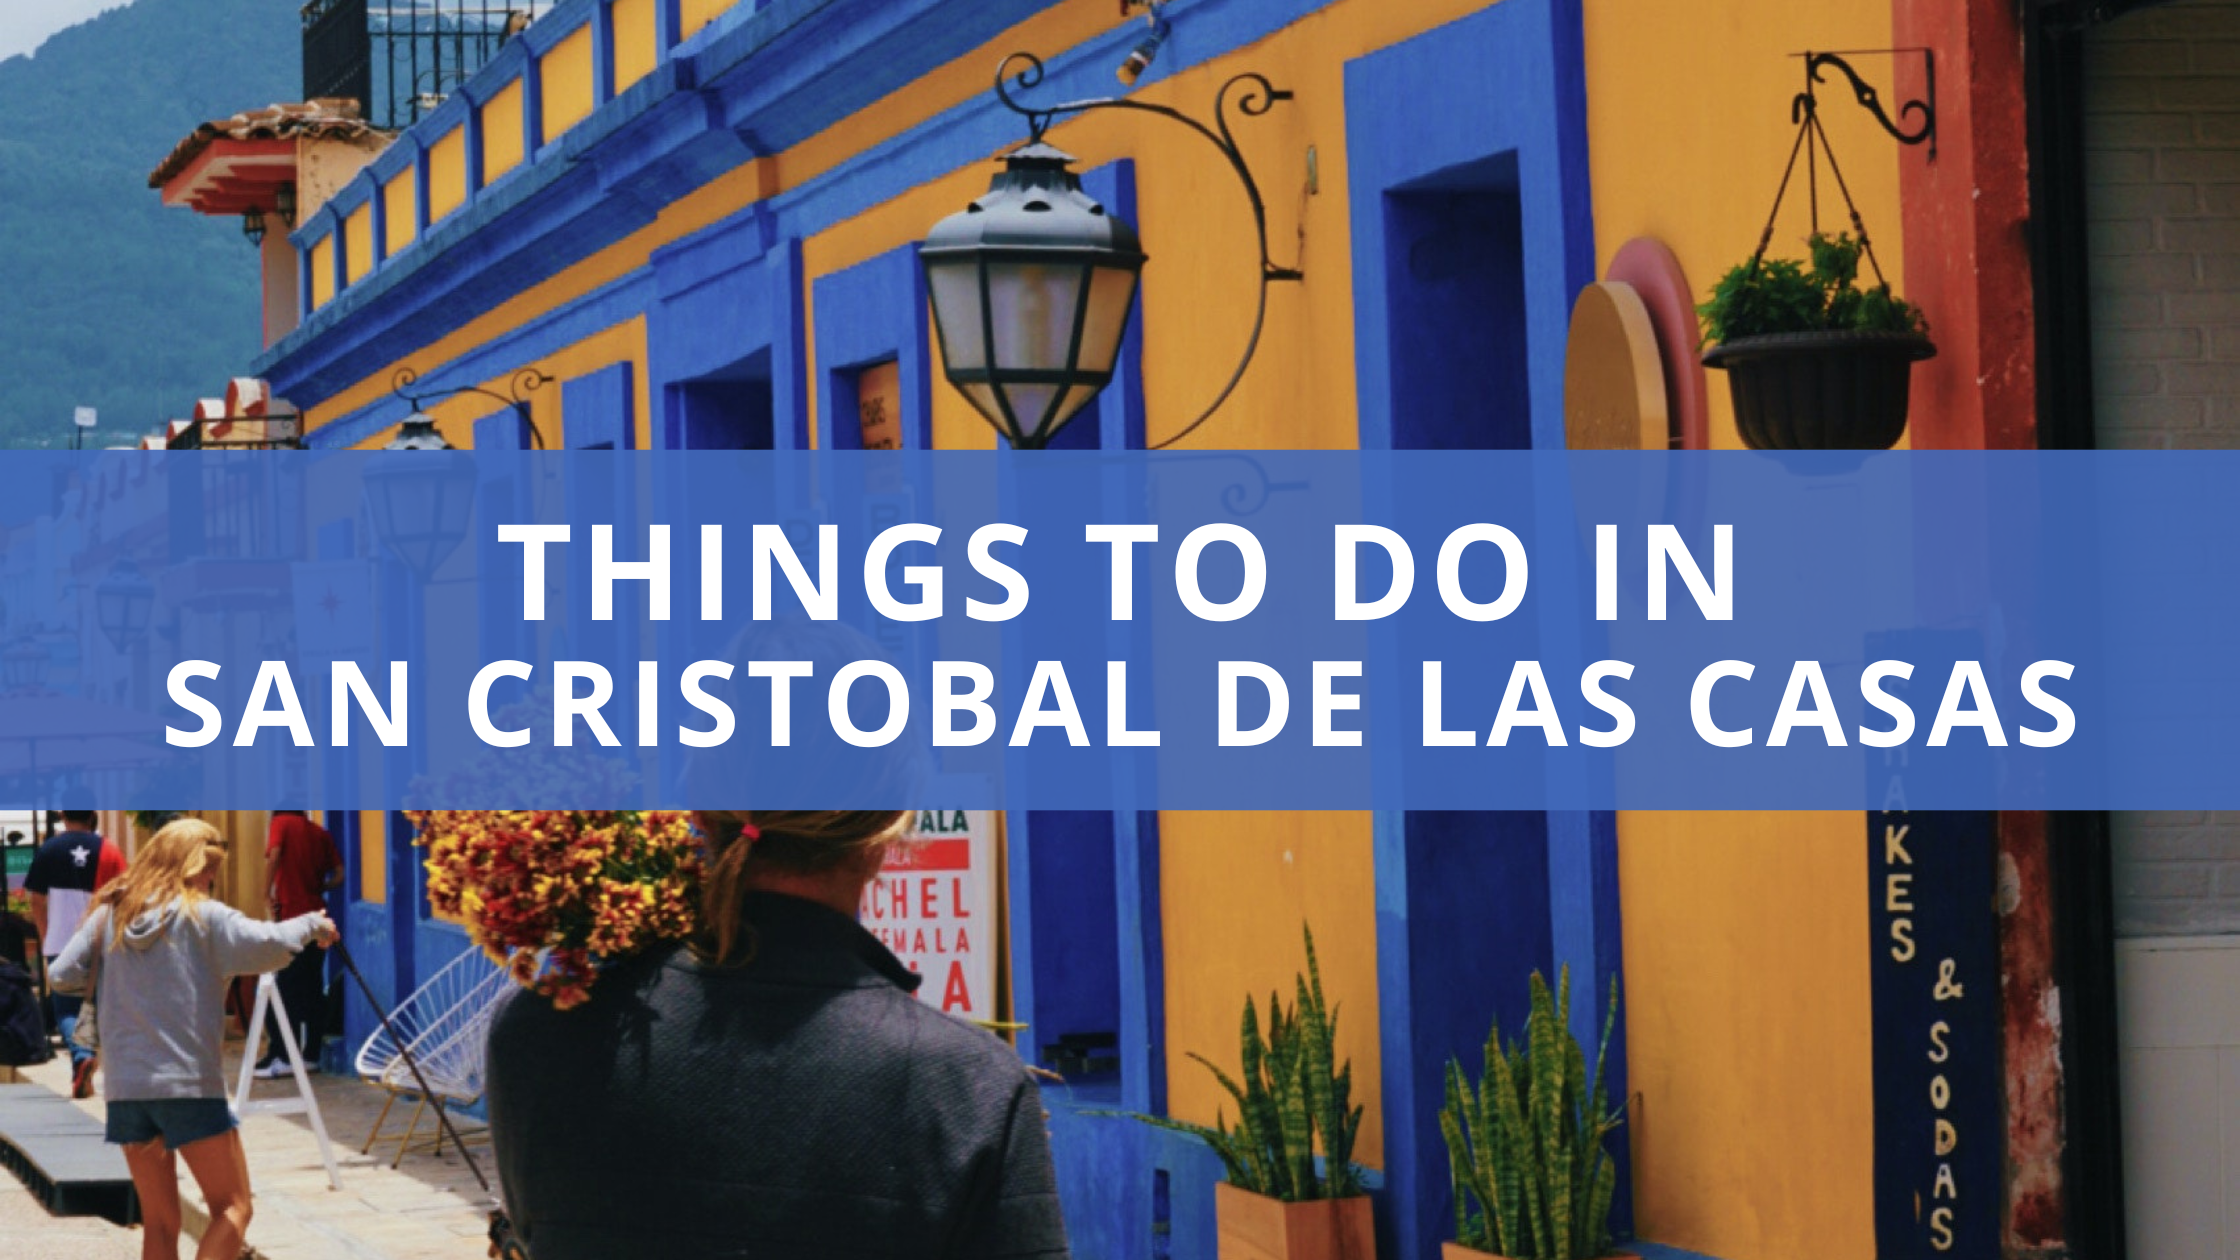 Things to Do in San Cristobal de las casas